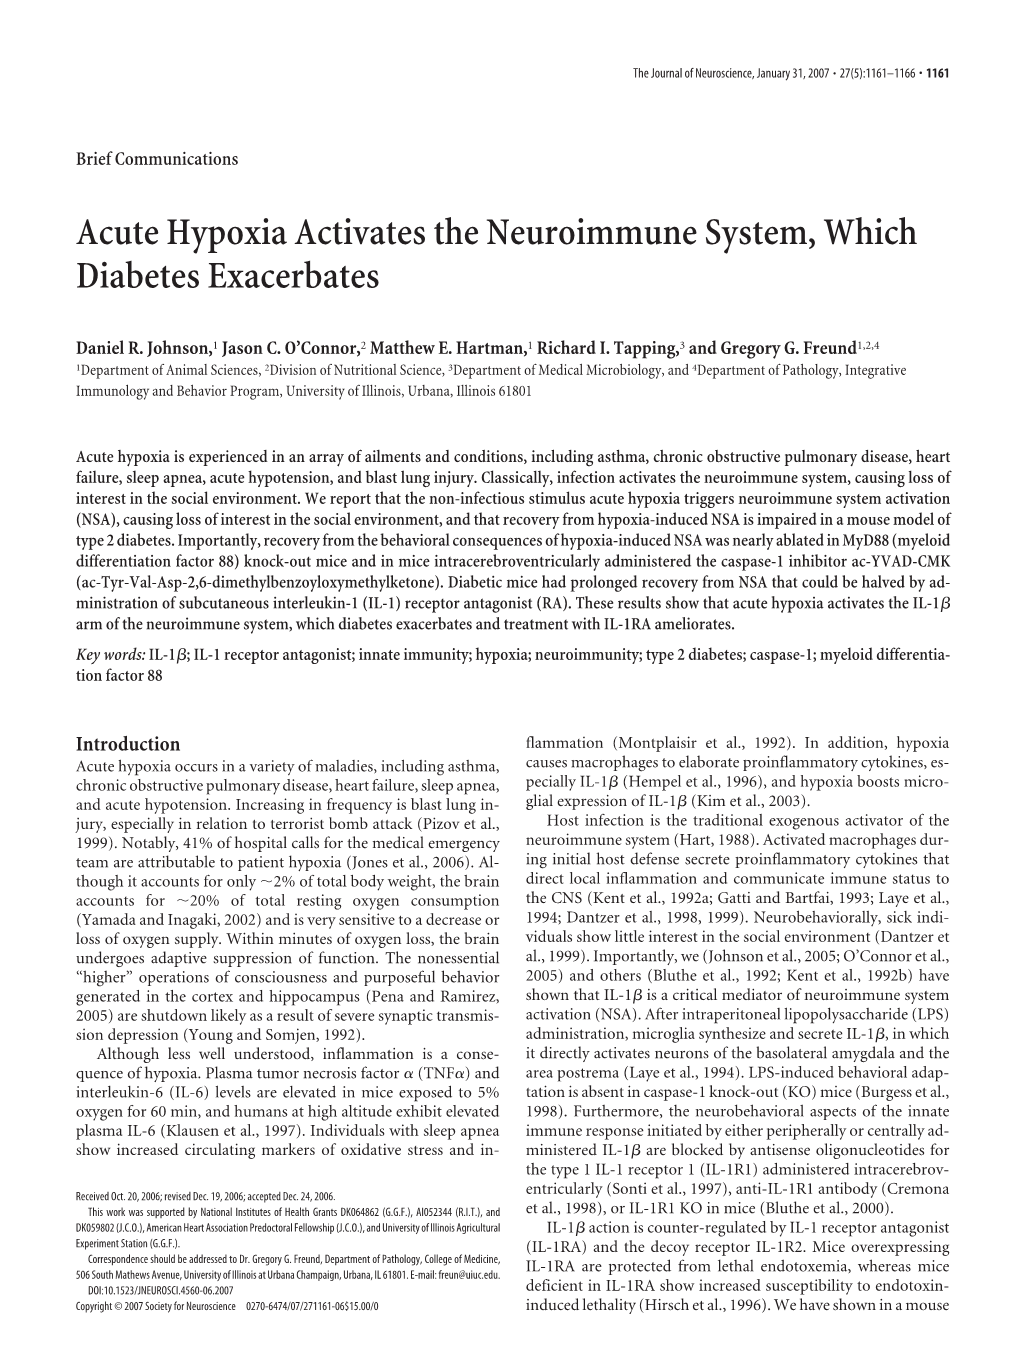 Acute Hypoxia Activates the Neuroimmune System, Which Diabetes Exacerbates